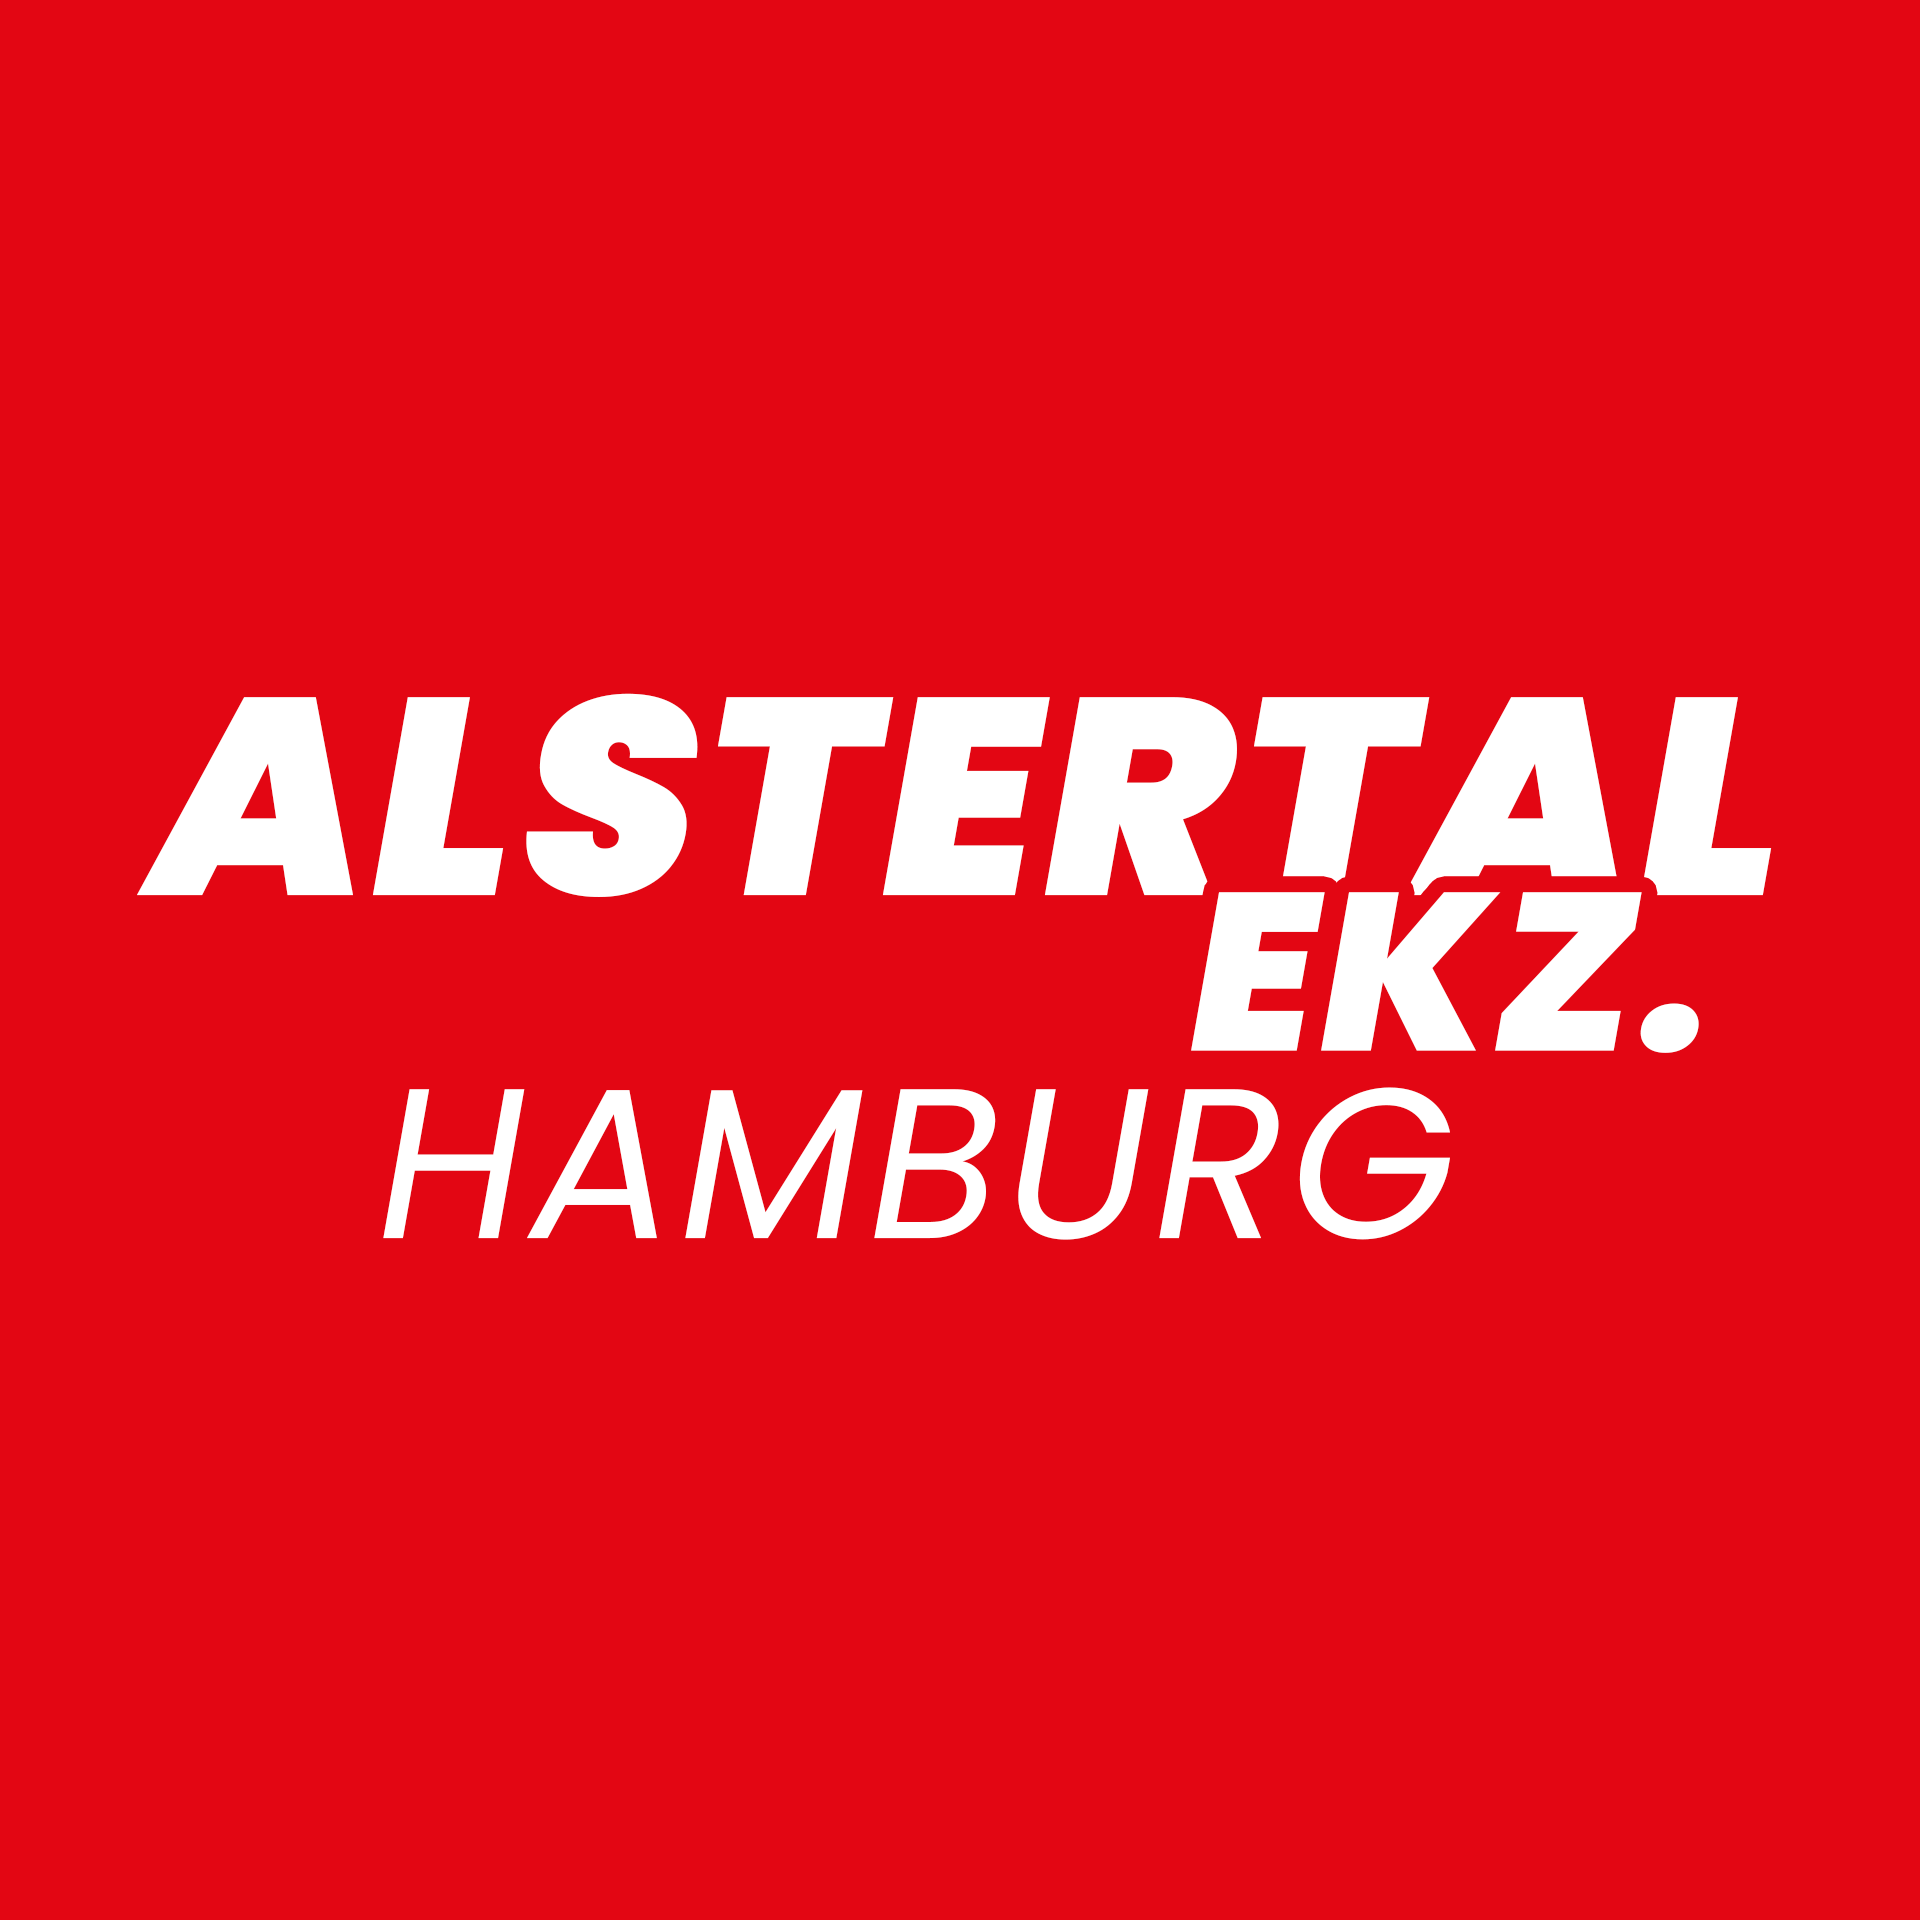 Alstertal Ekz. Hamburg